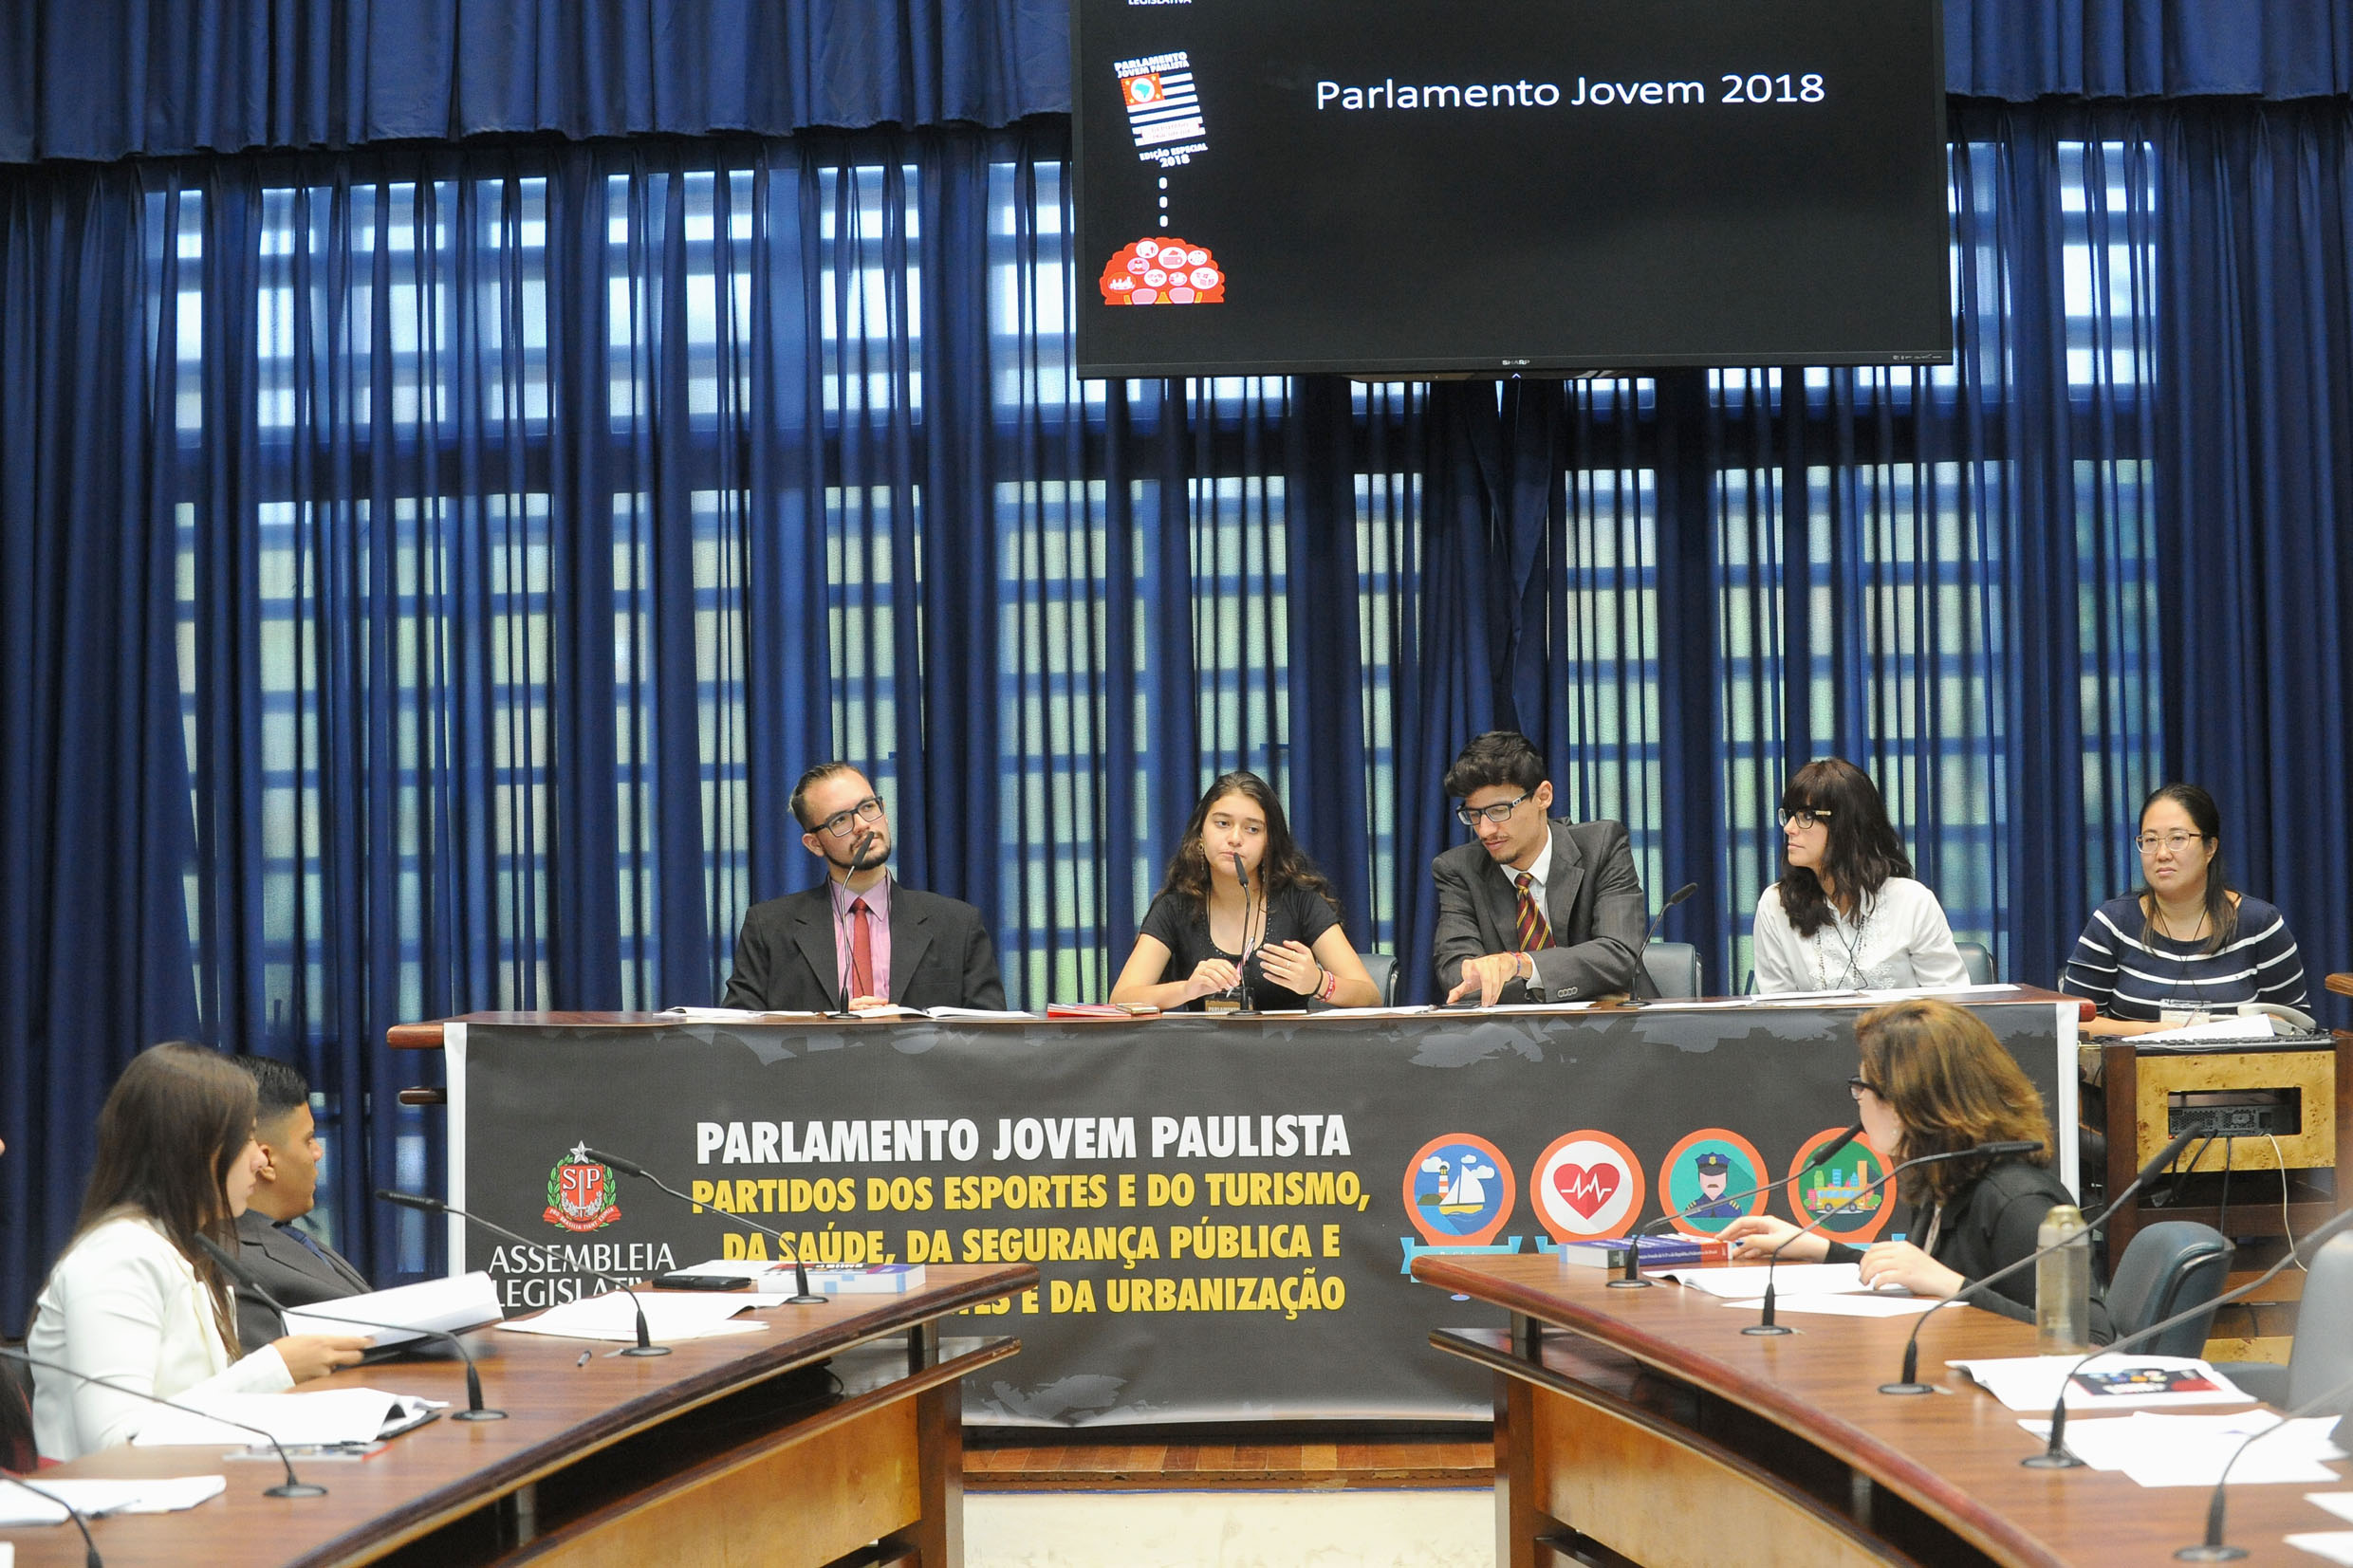 Parlamento Jovem Paulista <a style='float:right;color:#ccc' href='https://www3.al.sp.gov.br/repositorio/noticia/N-04-2018/fg222115.jpg' target=_blank><i class='bi bi-zoom-in'></i> Clique para ver a imagem </a>